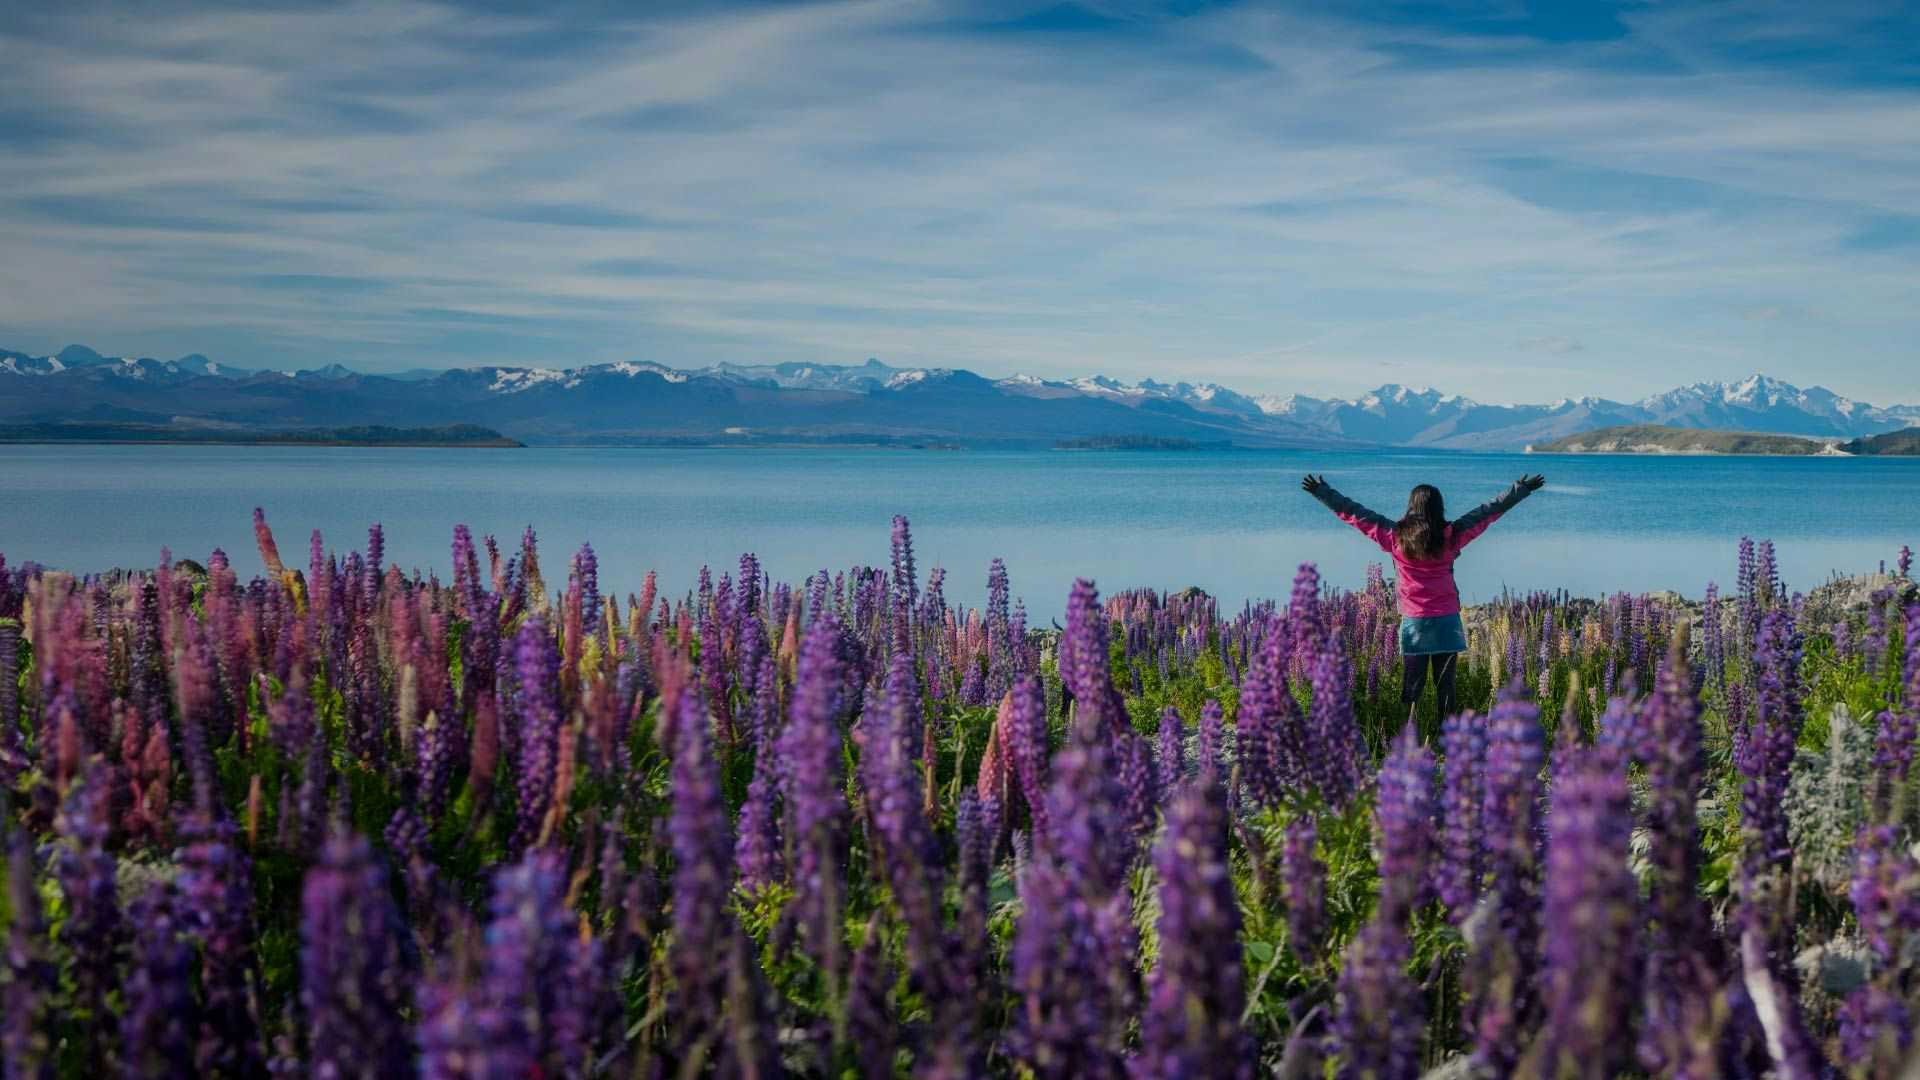 Woman standing among the lupin flowers next to Lake Tekapo in New Zealand